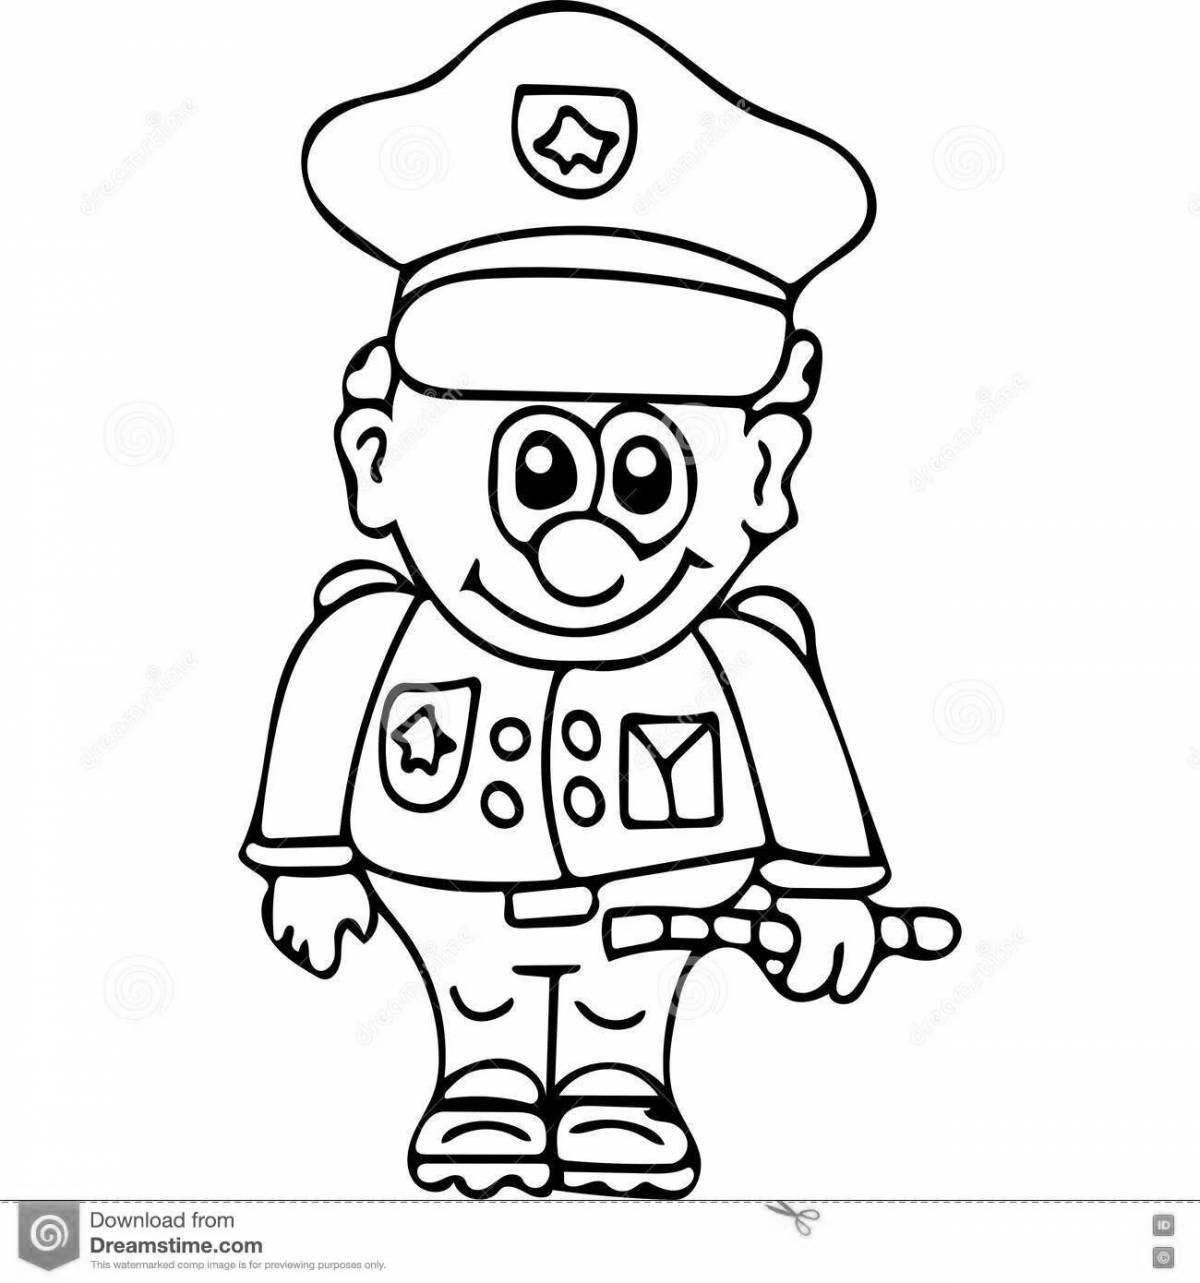 Coloring page joyful traffic police inspector